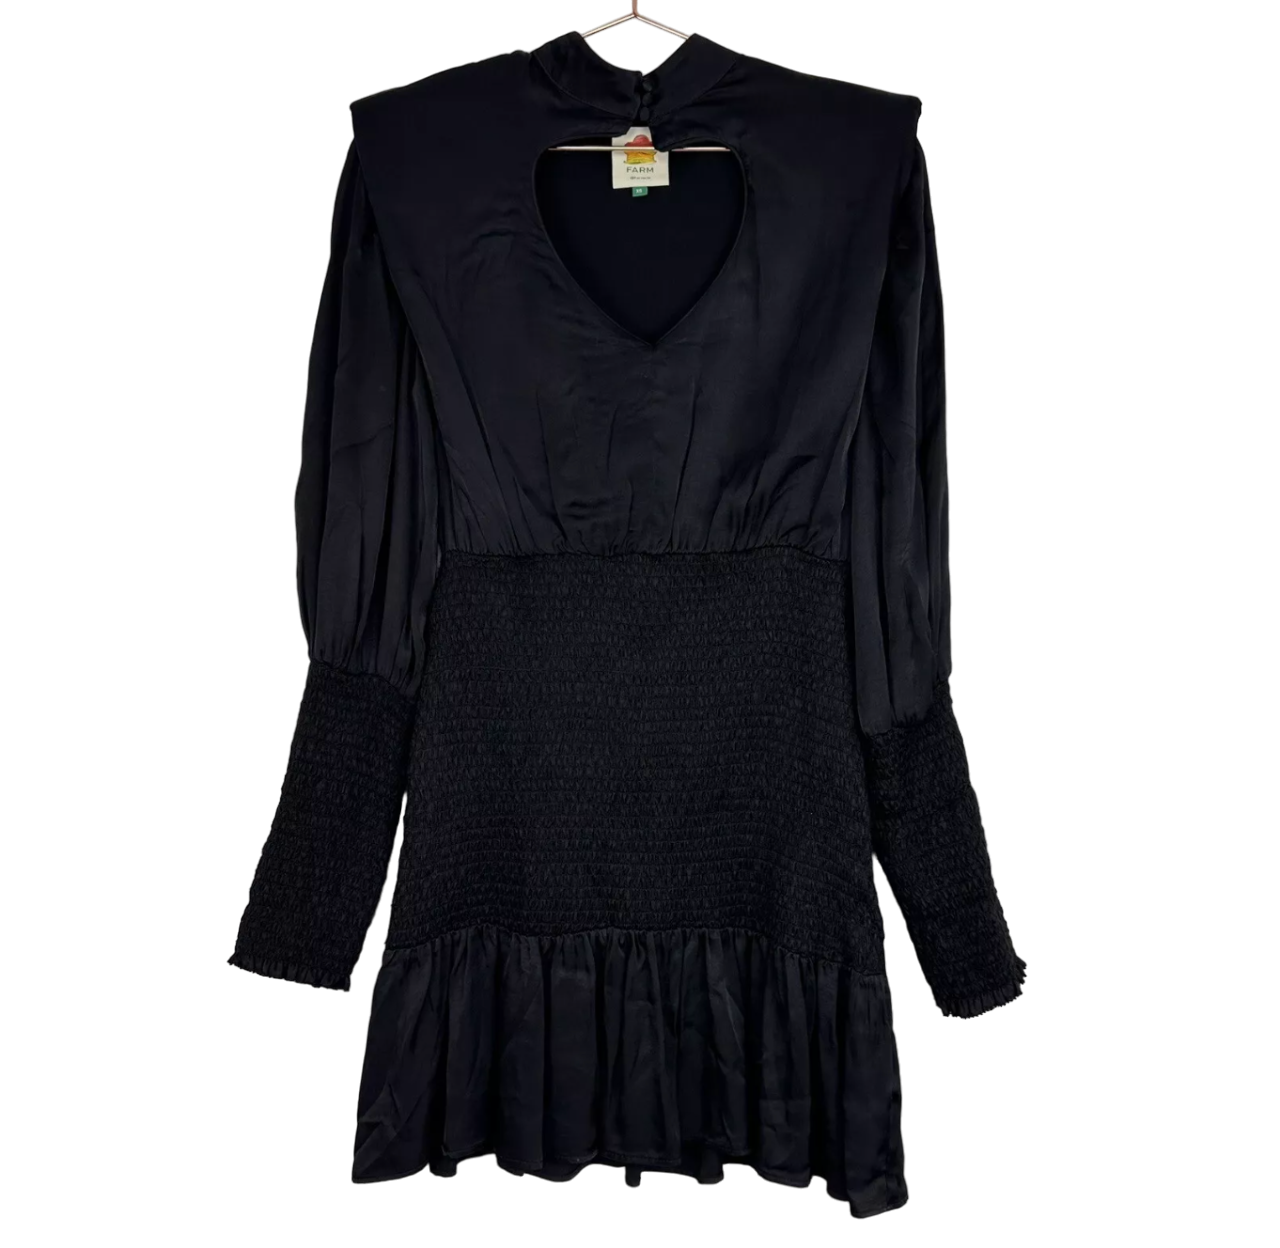 Farm Rio Black Heart Neckline Mini Dress UK XS